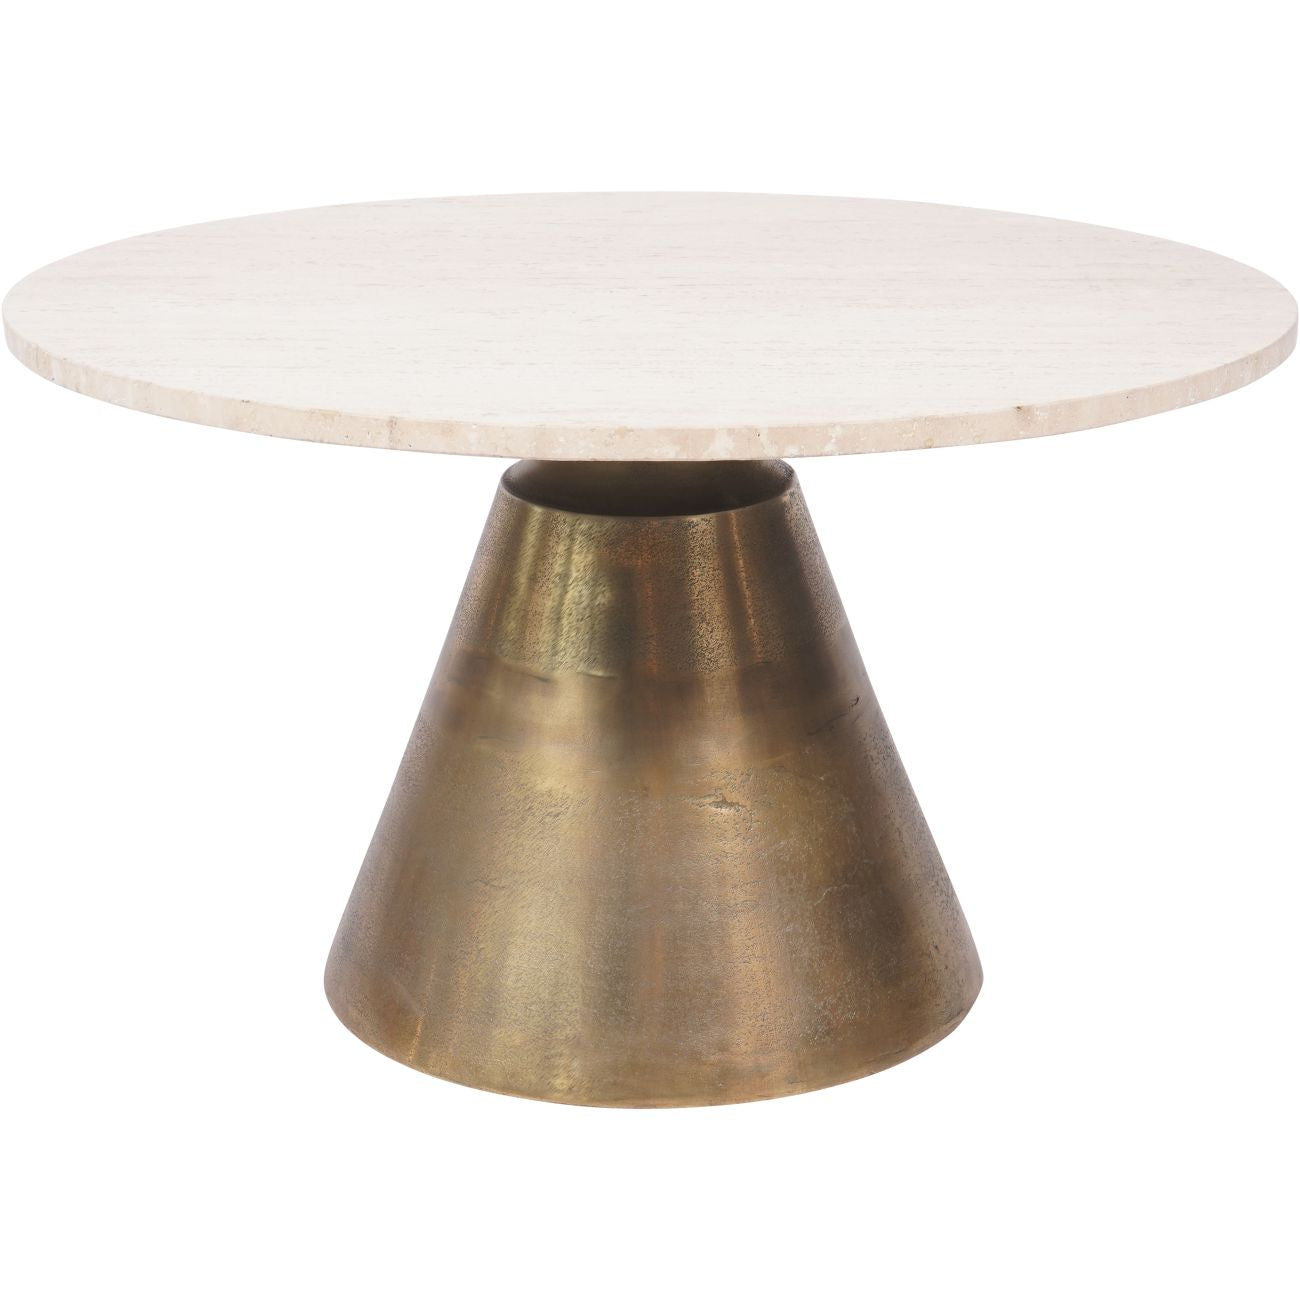 CAVA Antique Brass and Light Travertine Coffee Table Large 75cm